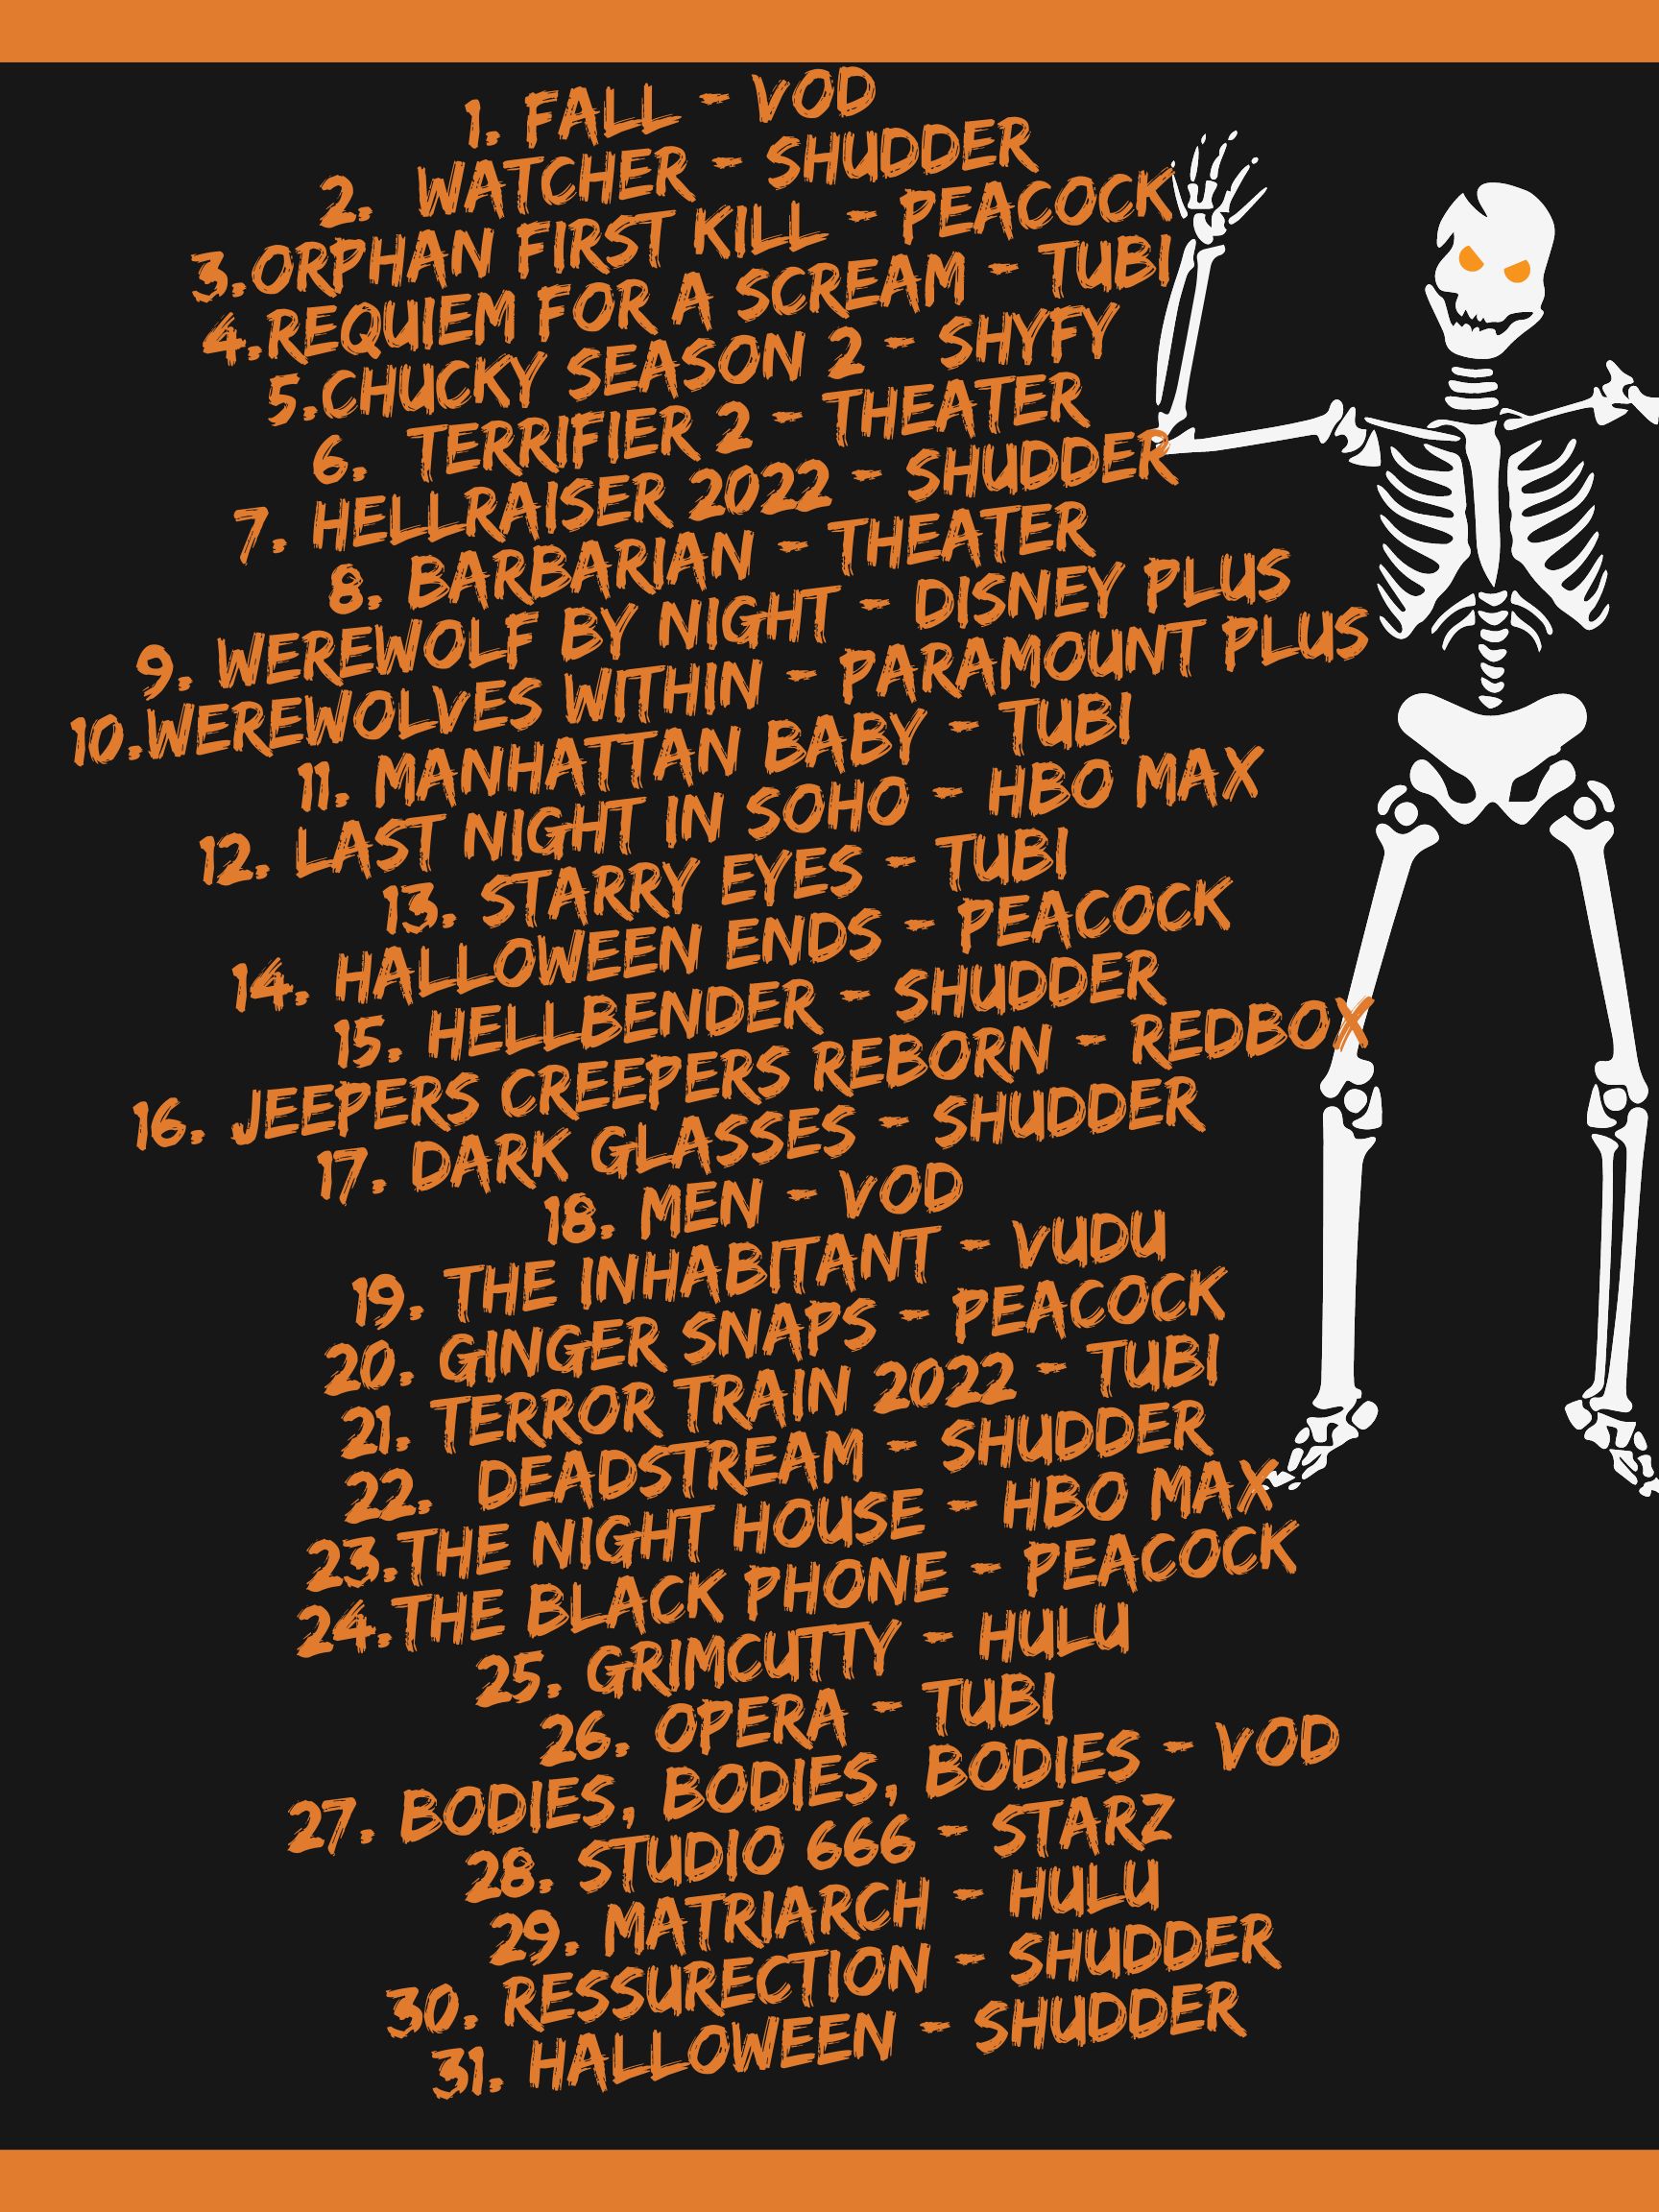 31 days of horror movies, halloween horror movies, halloween 2022, horror movies 2022, halloween horror movies challenge